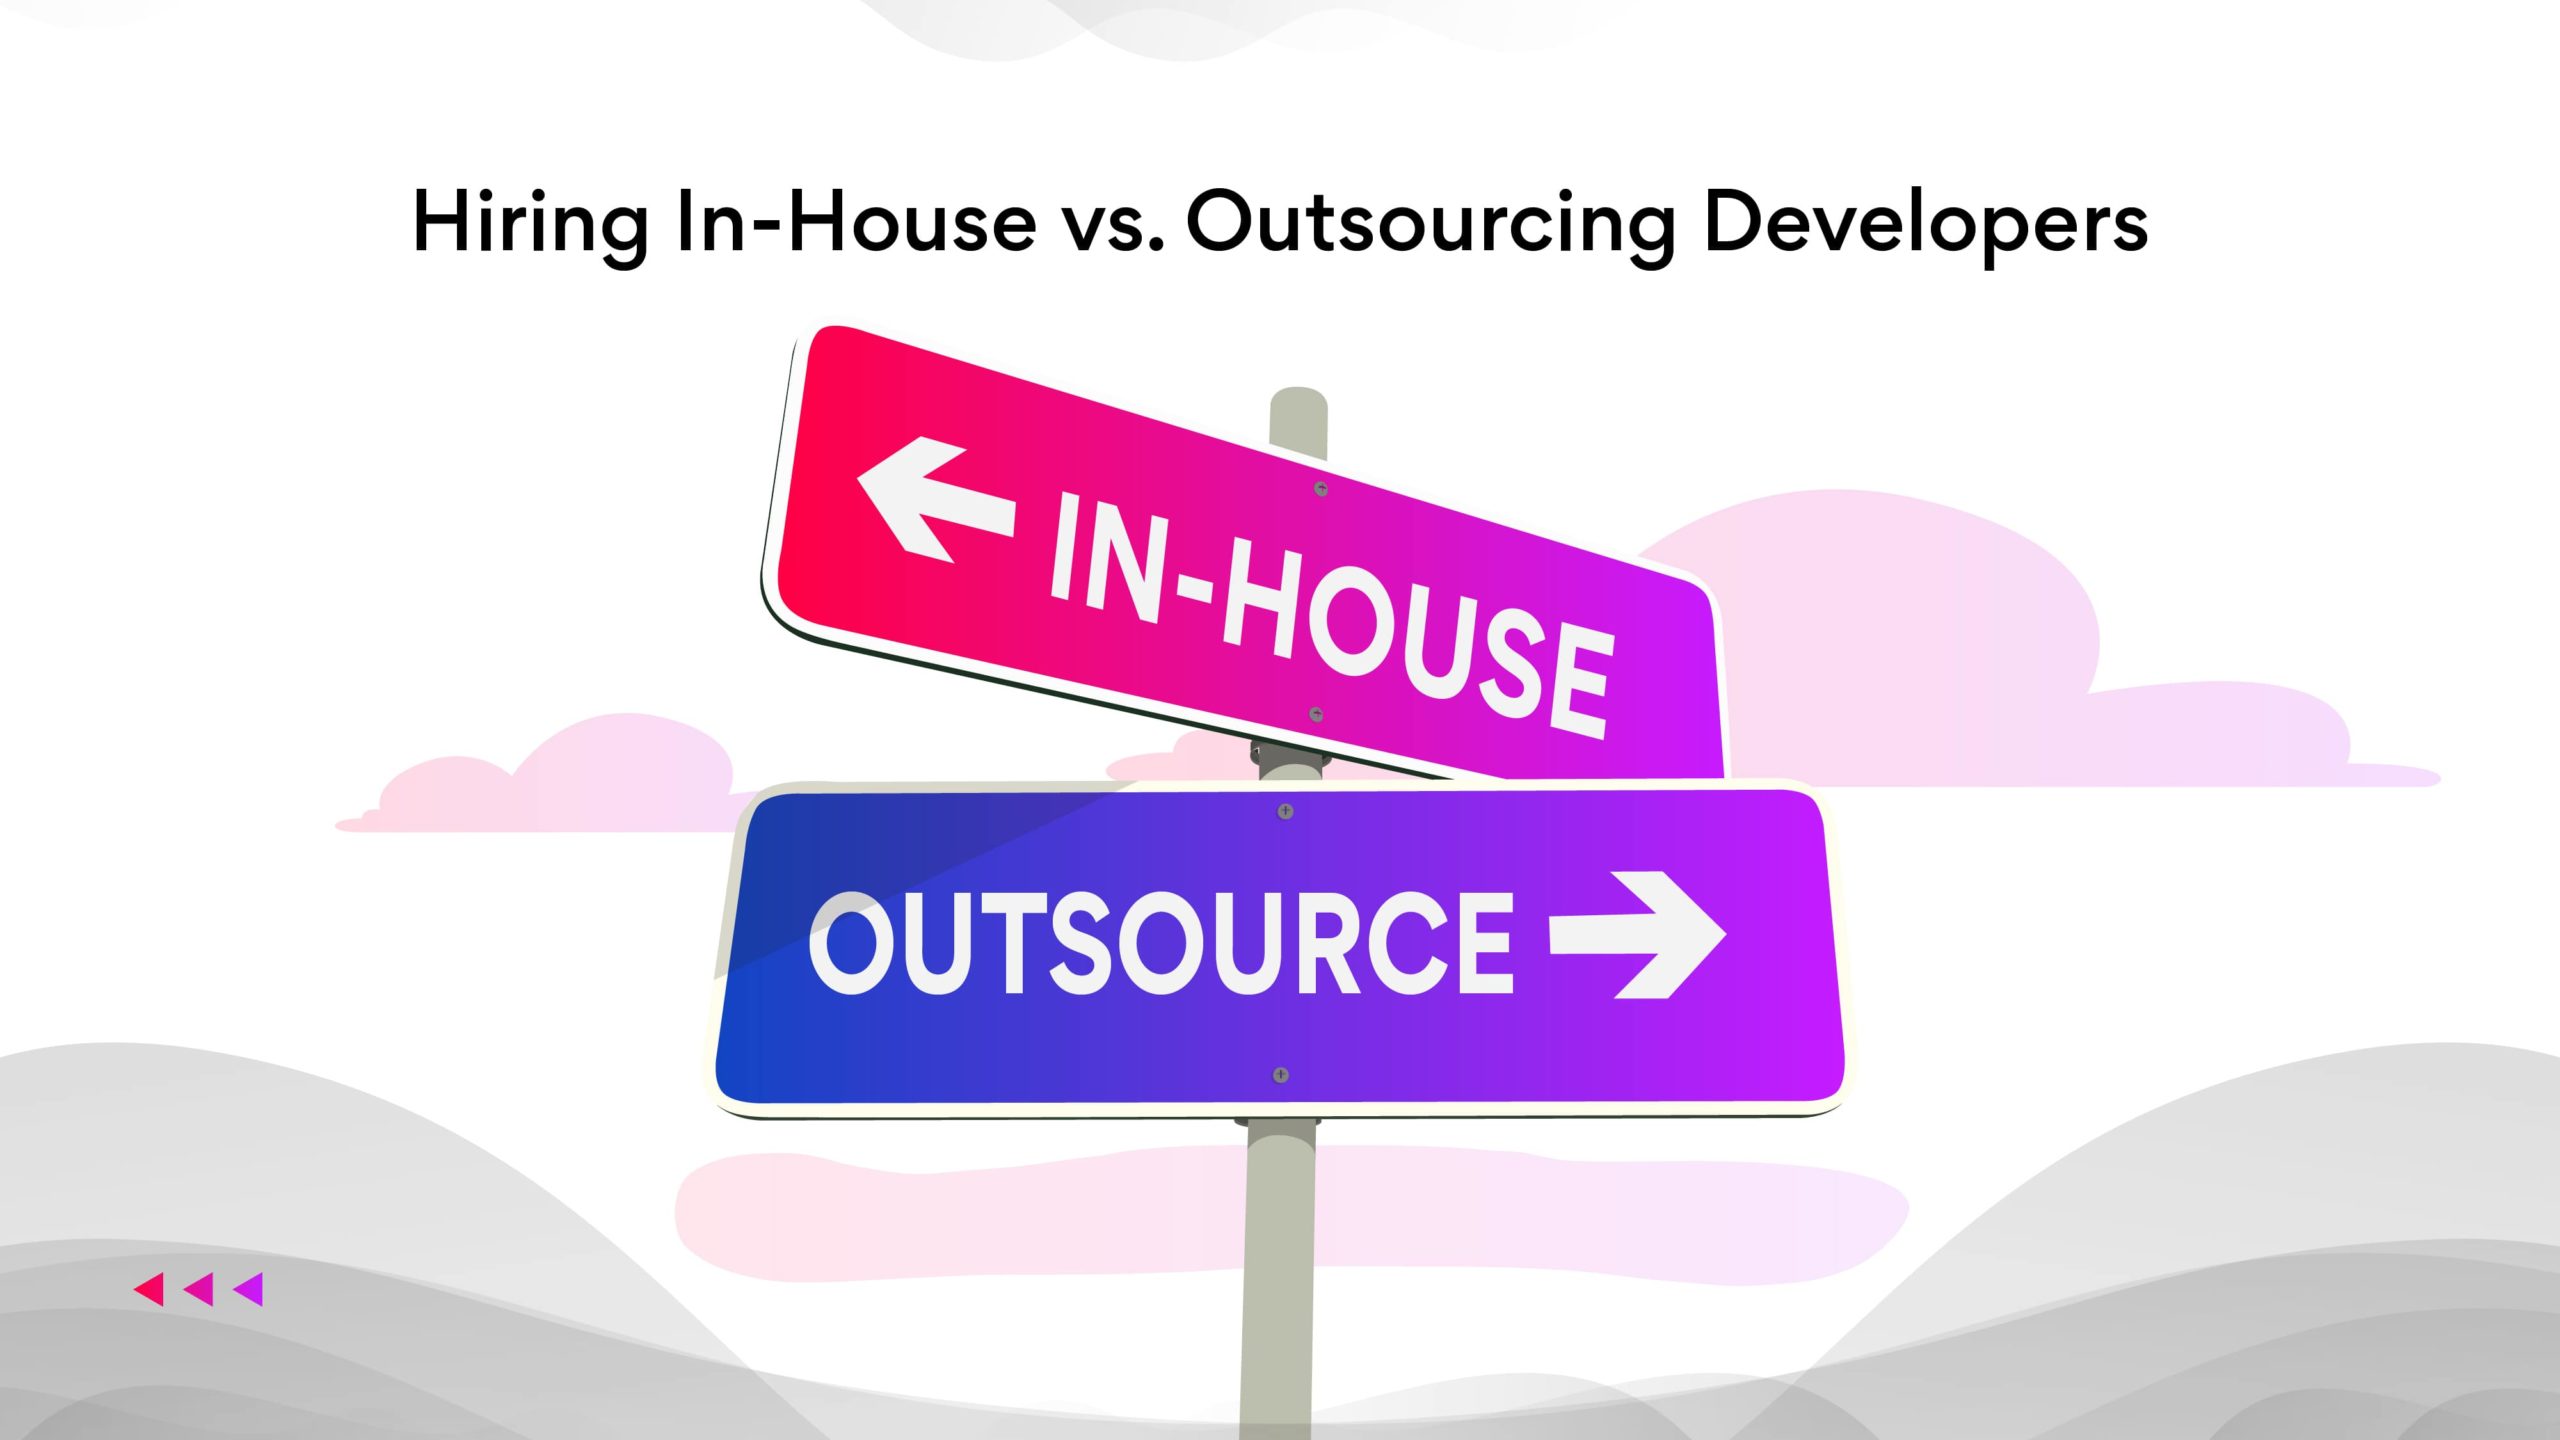 In-house vs Outsourcing Developer Hiring